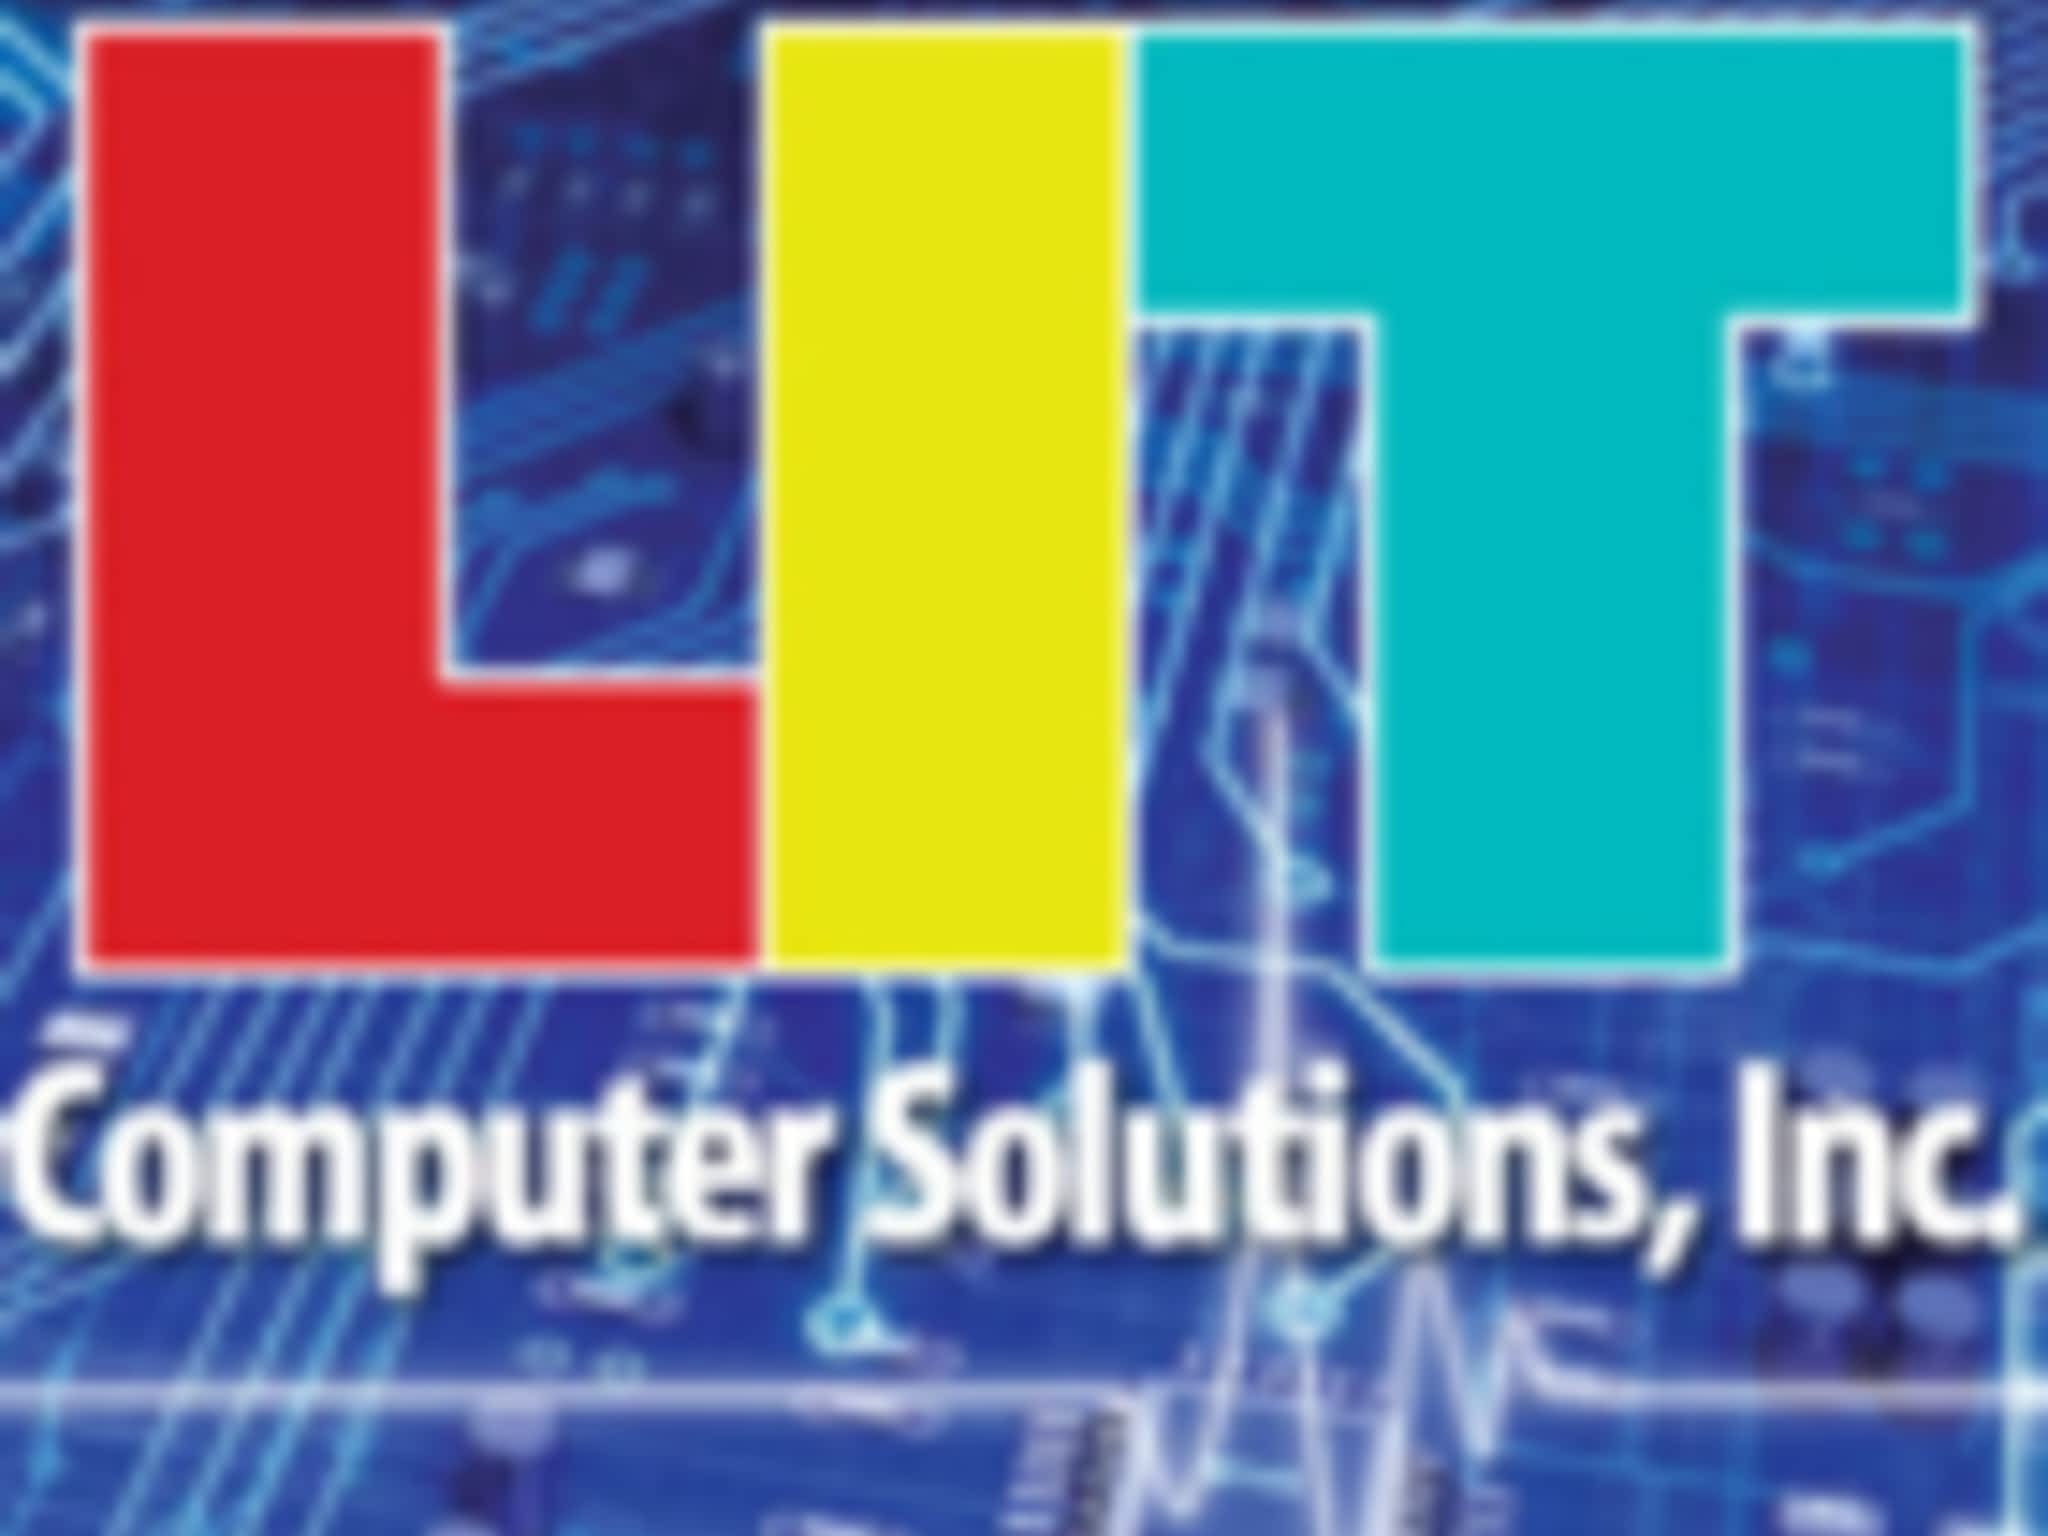 photo LIT Computer Solutions Inc